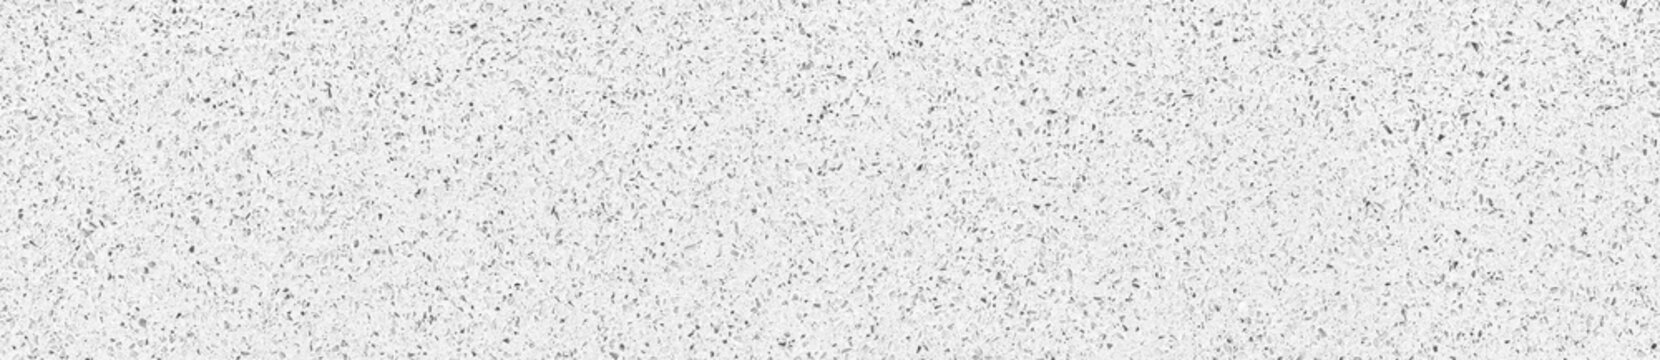 Quartz surface white background texture for bathroom or kitchen countertop